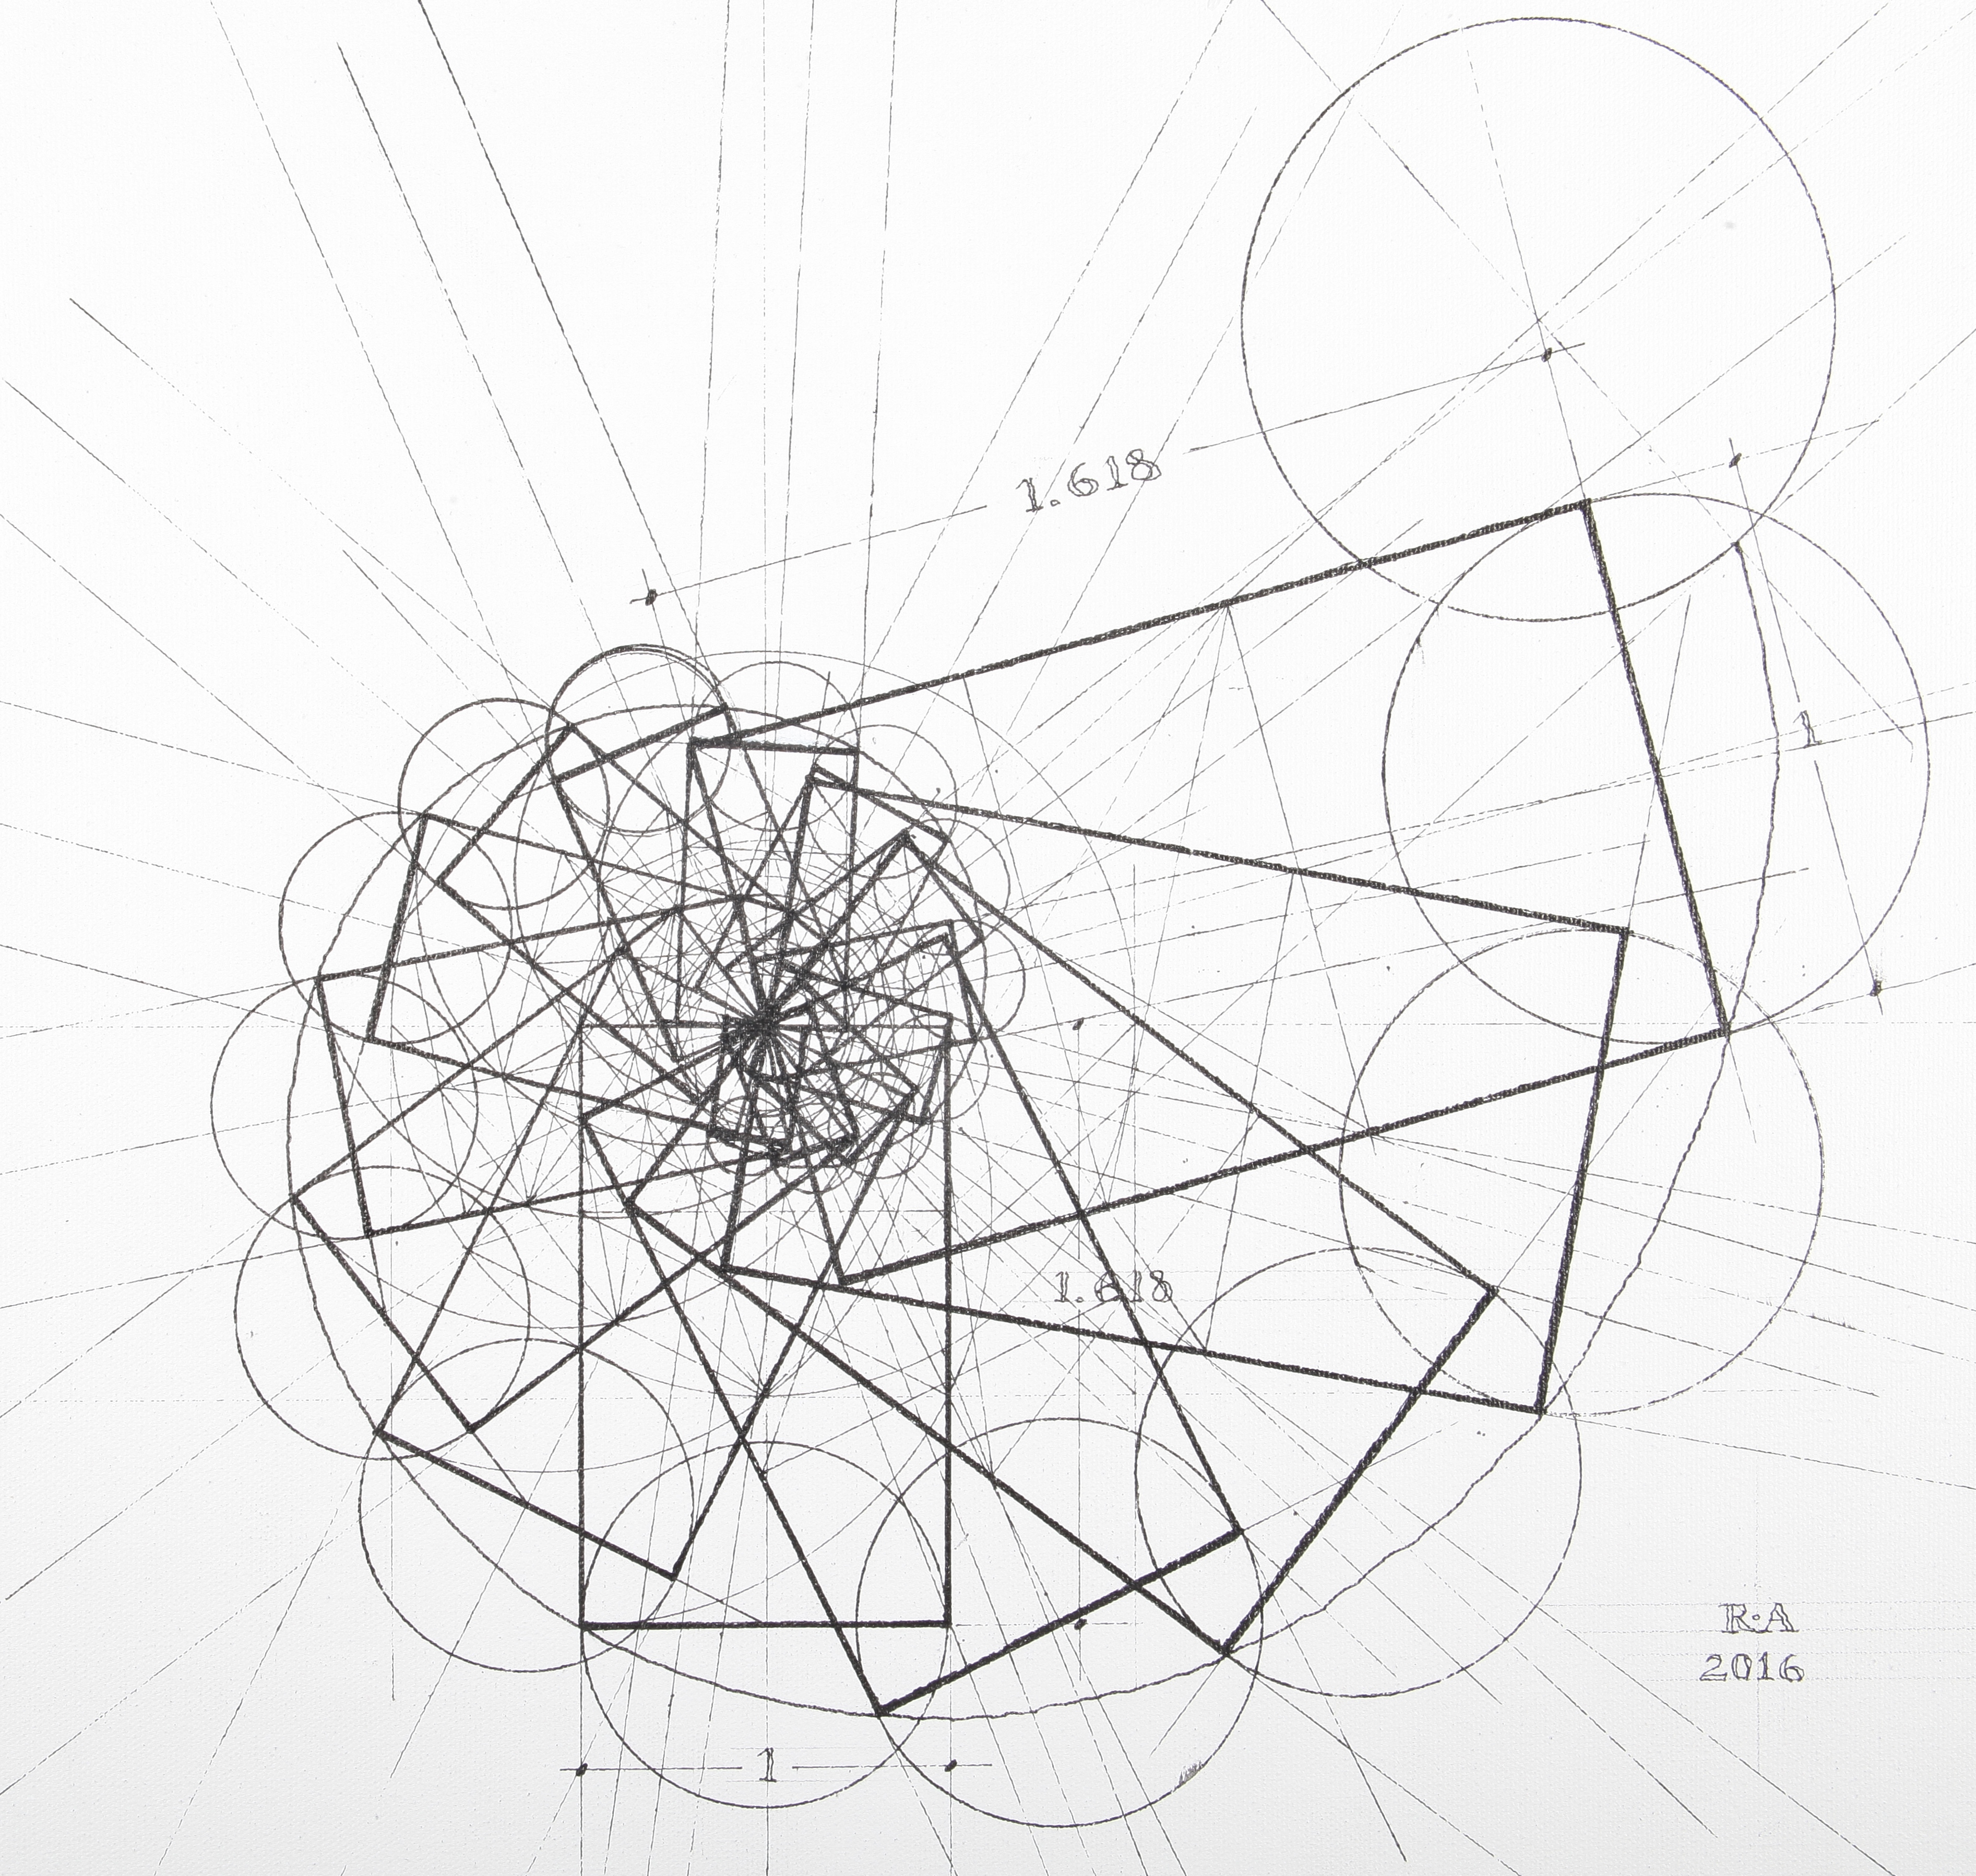 Rafael Araujo Draws Perfect Illustrations by Hand Using Math's Golden